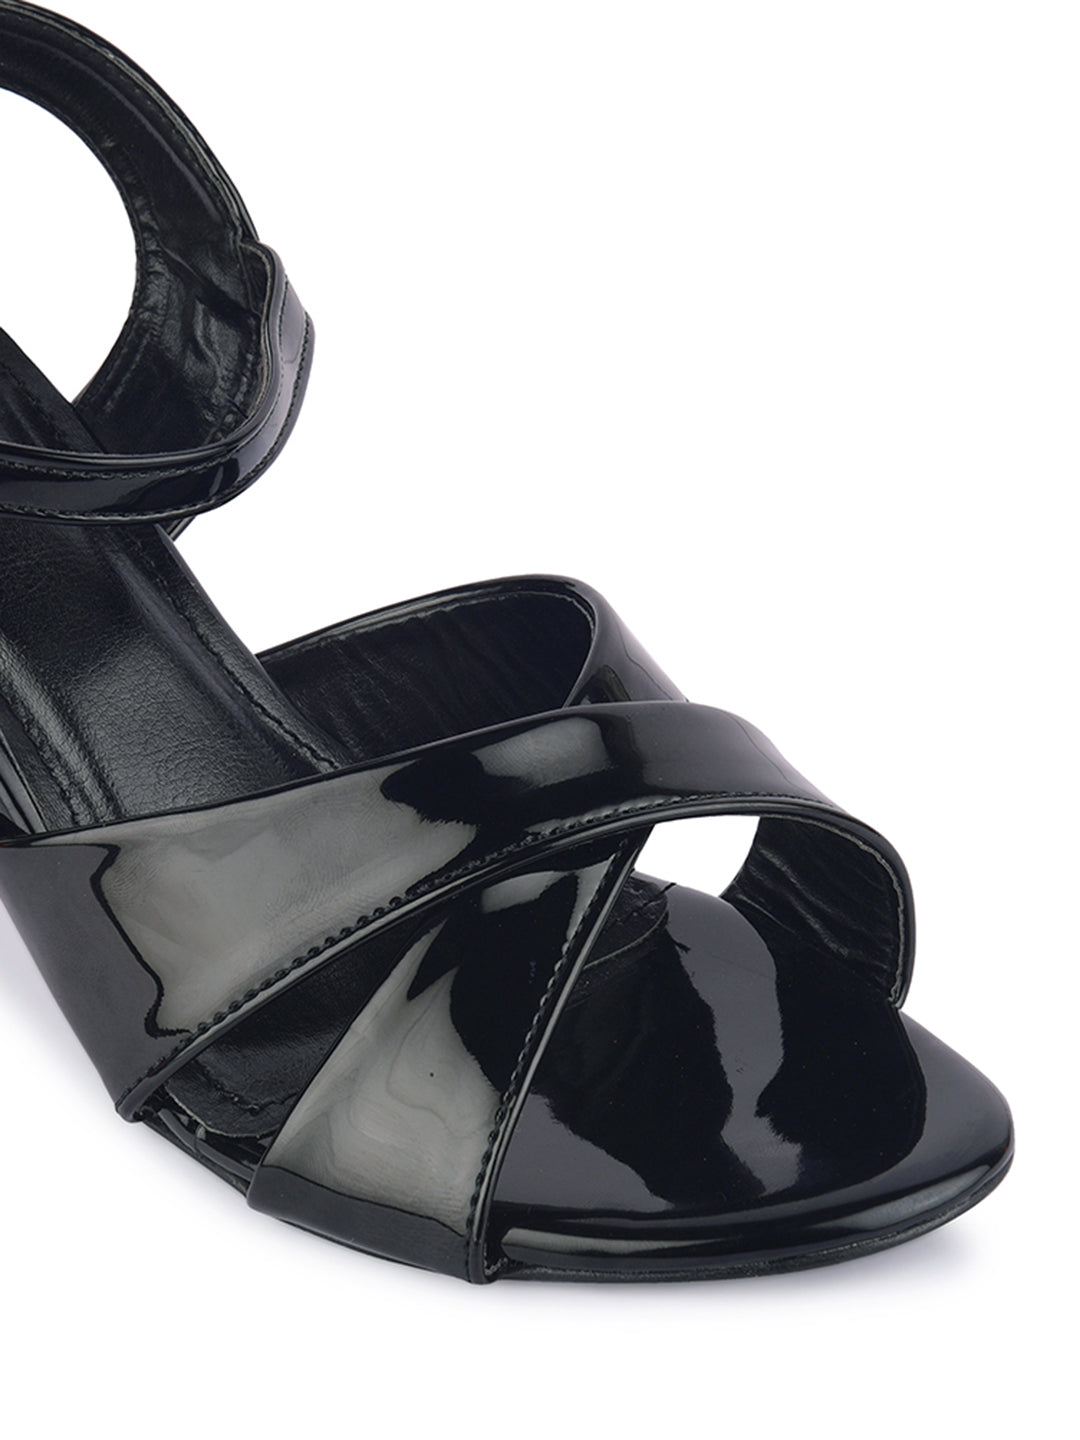 Buy Alexandra Womens Open Toe High Heels Platform Shoes Stiletto Dress  Sandals, Black, 5 at Amazon.in